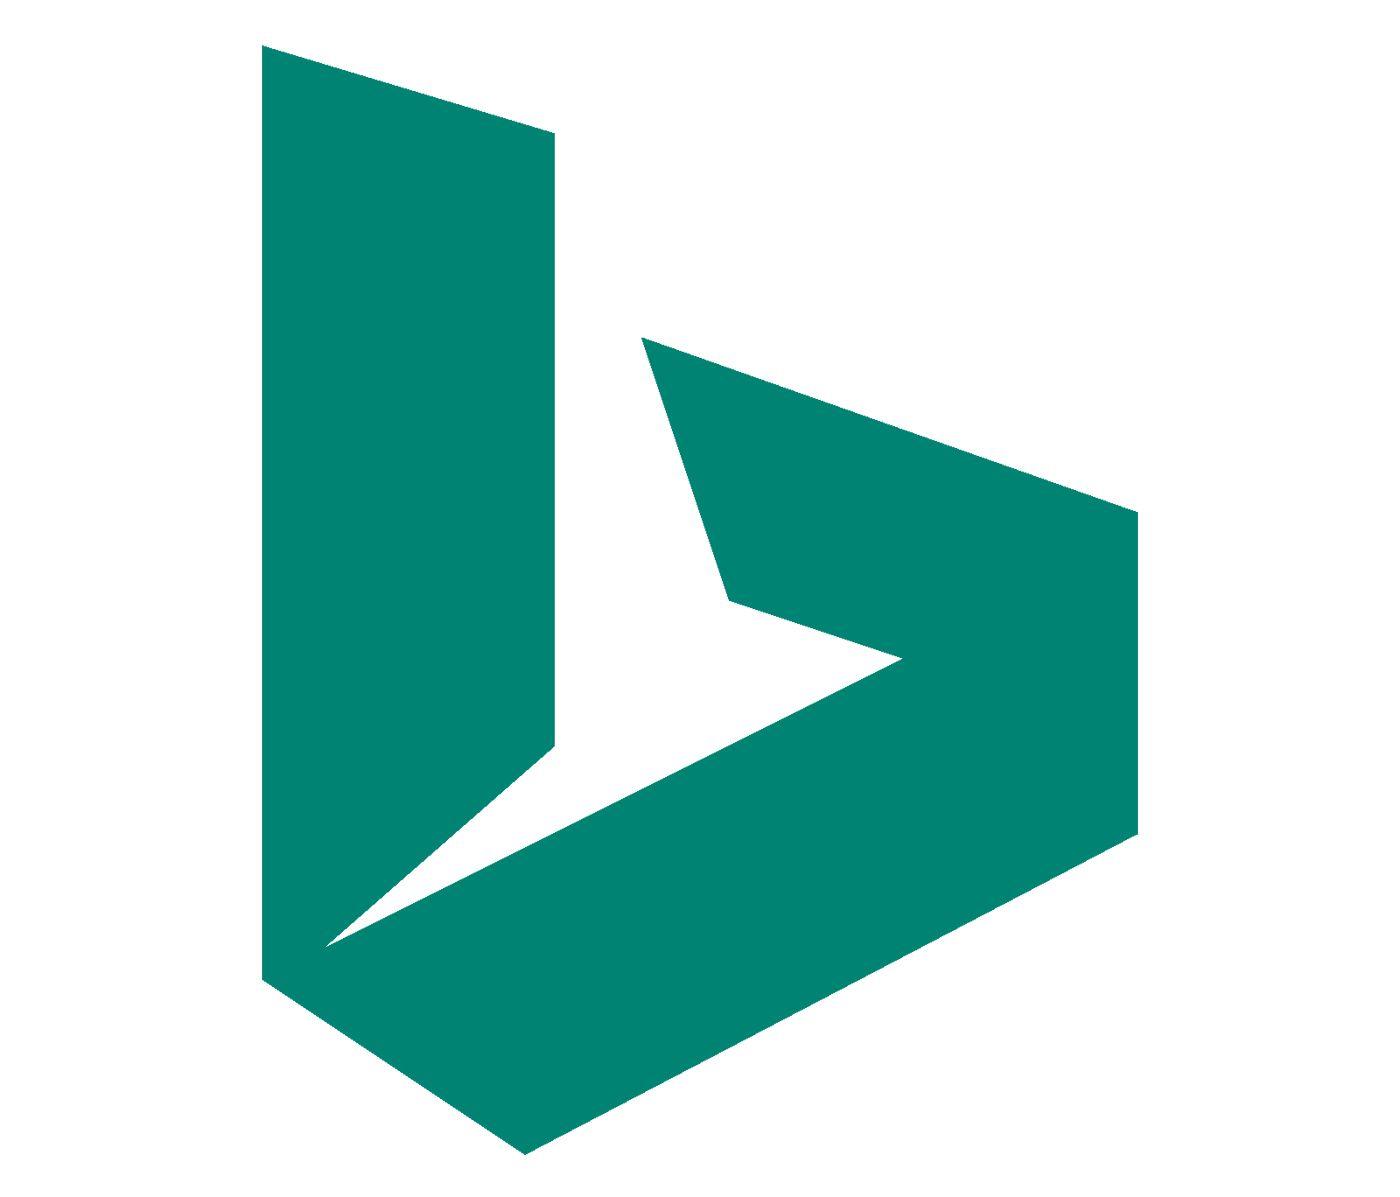 Bing Logo - Bing Logo, Bing Symbol, Meaning, History and Evolution